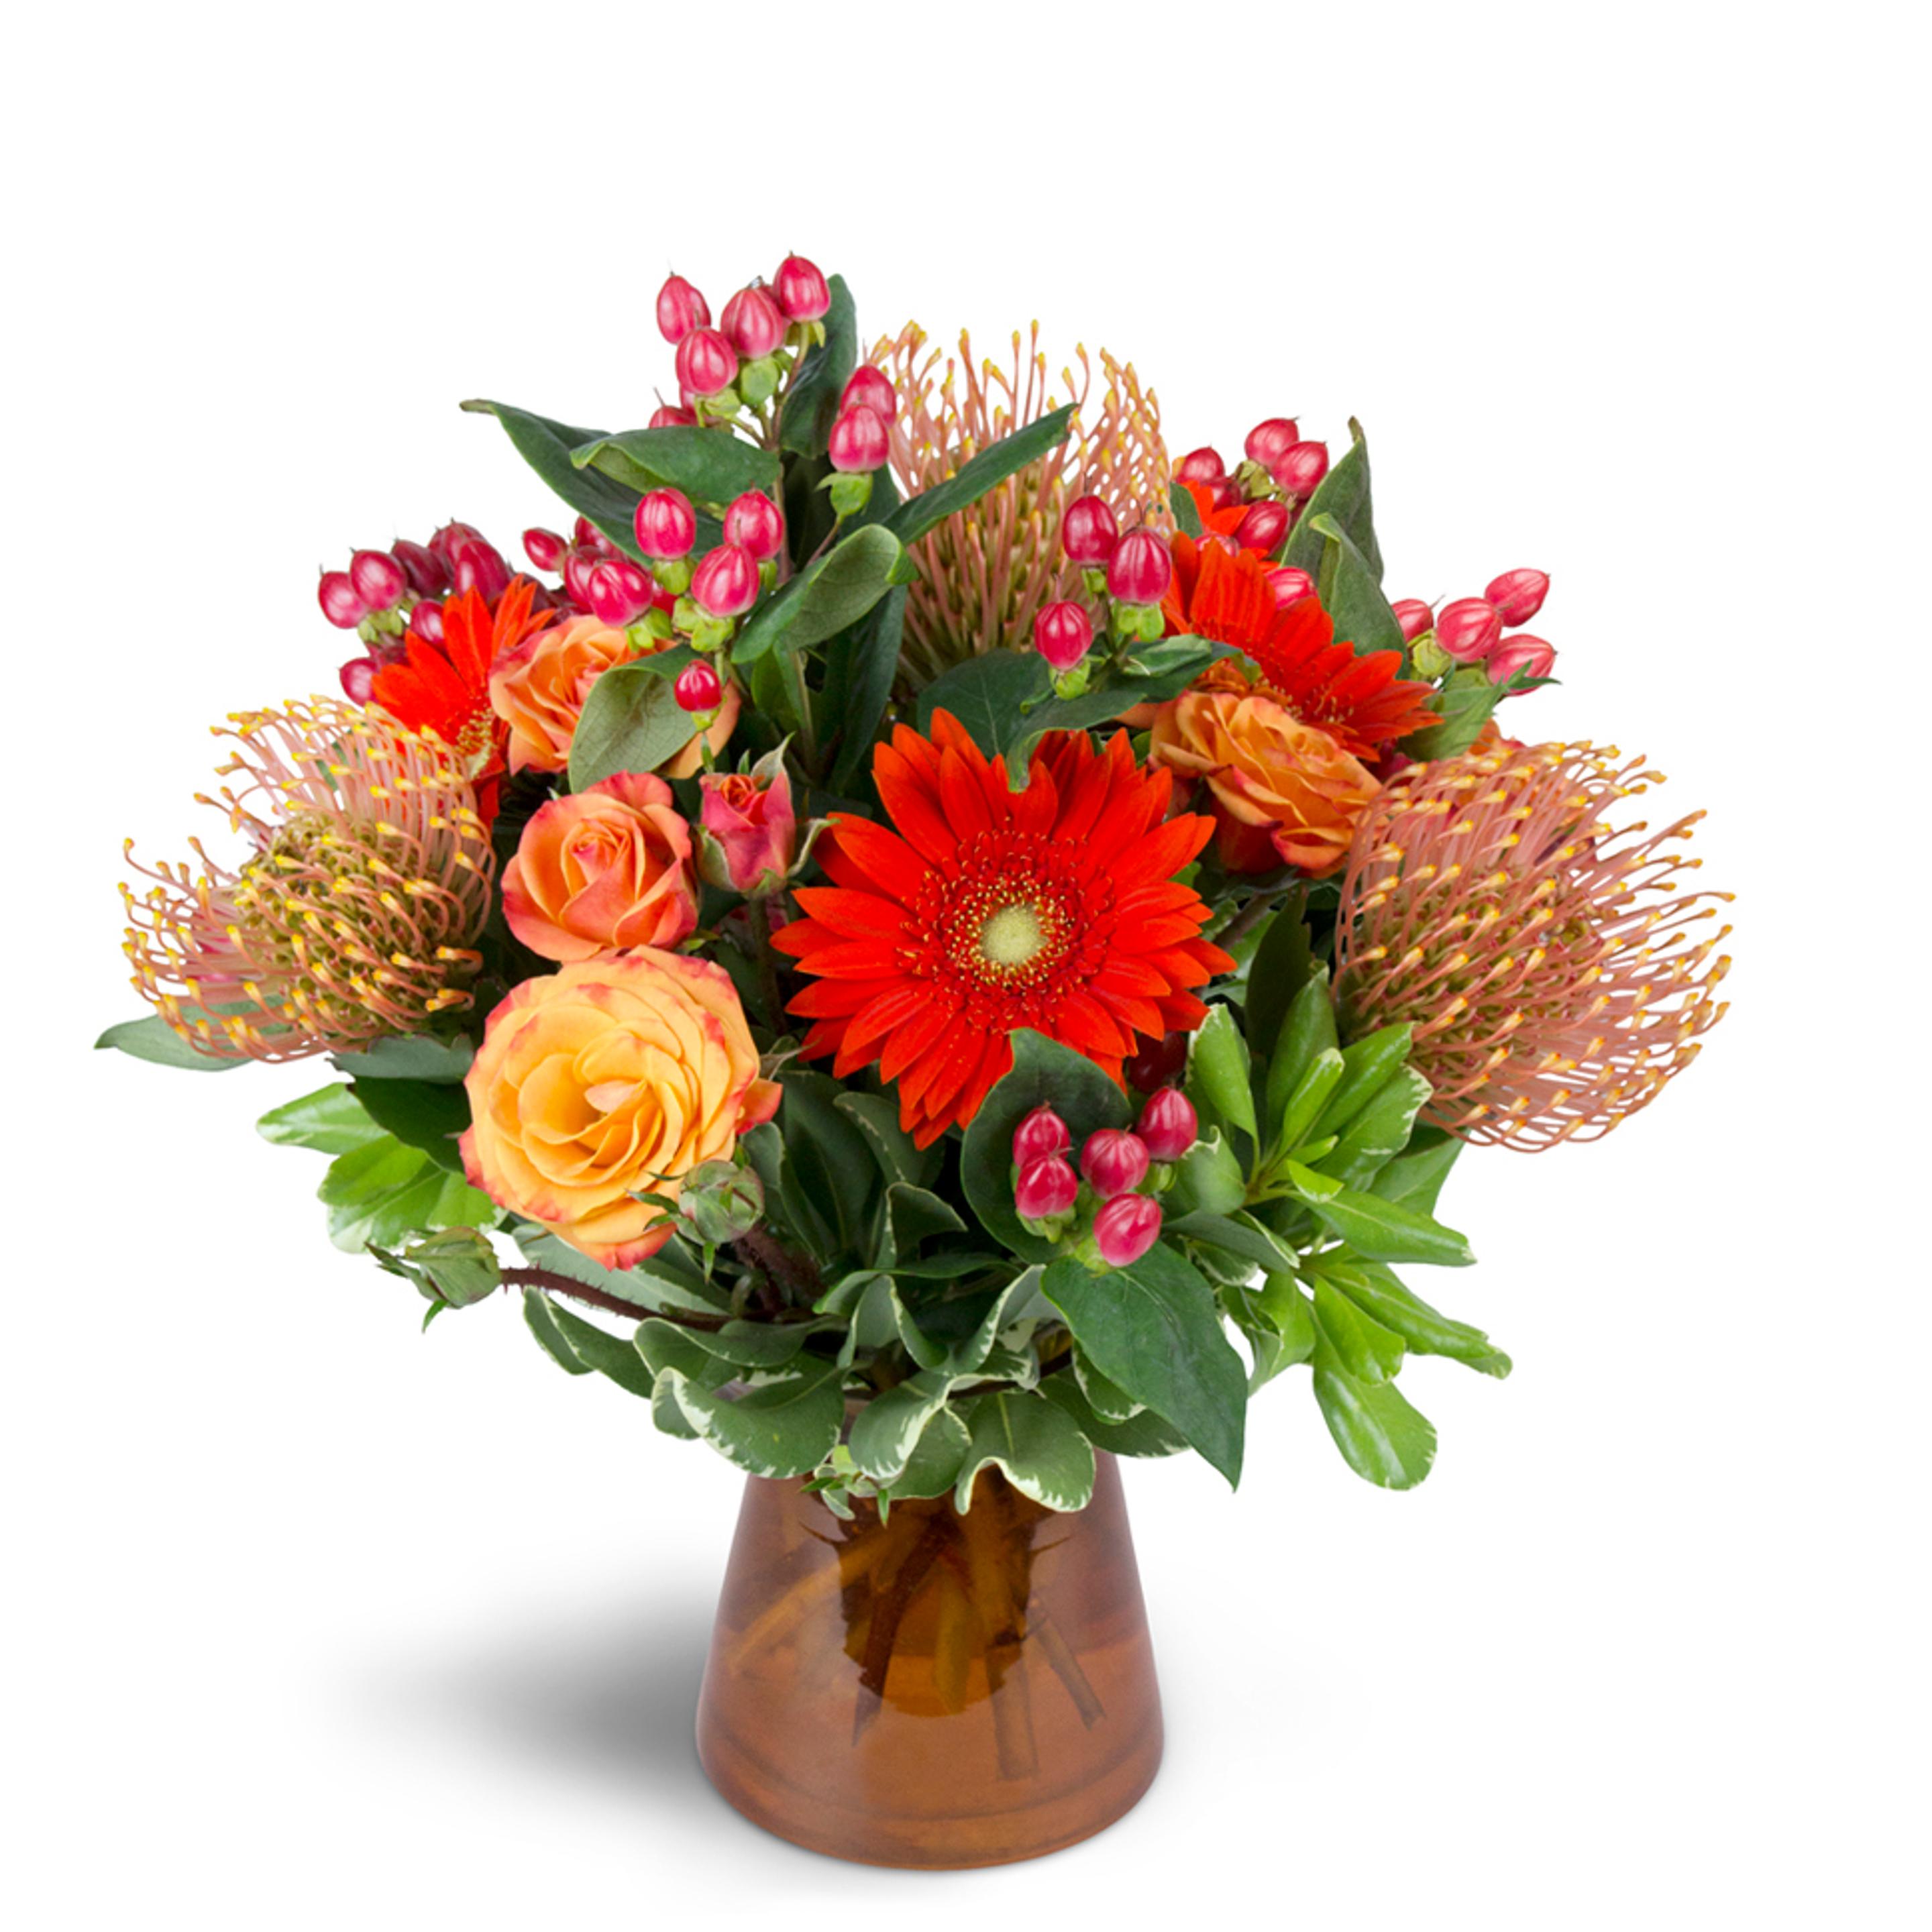 Orange flower arrangement - pincushion protea are arranged with orange spray roses, mini Gerbera daisies, and more.